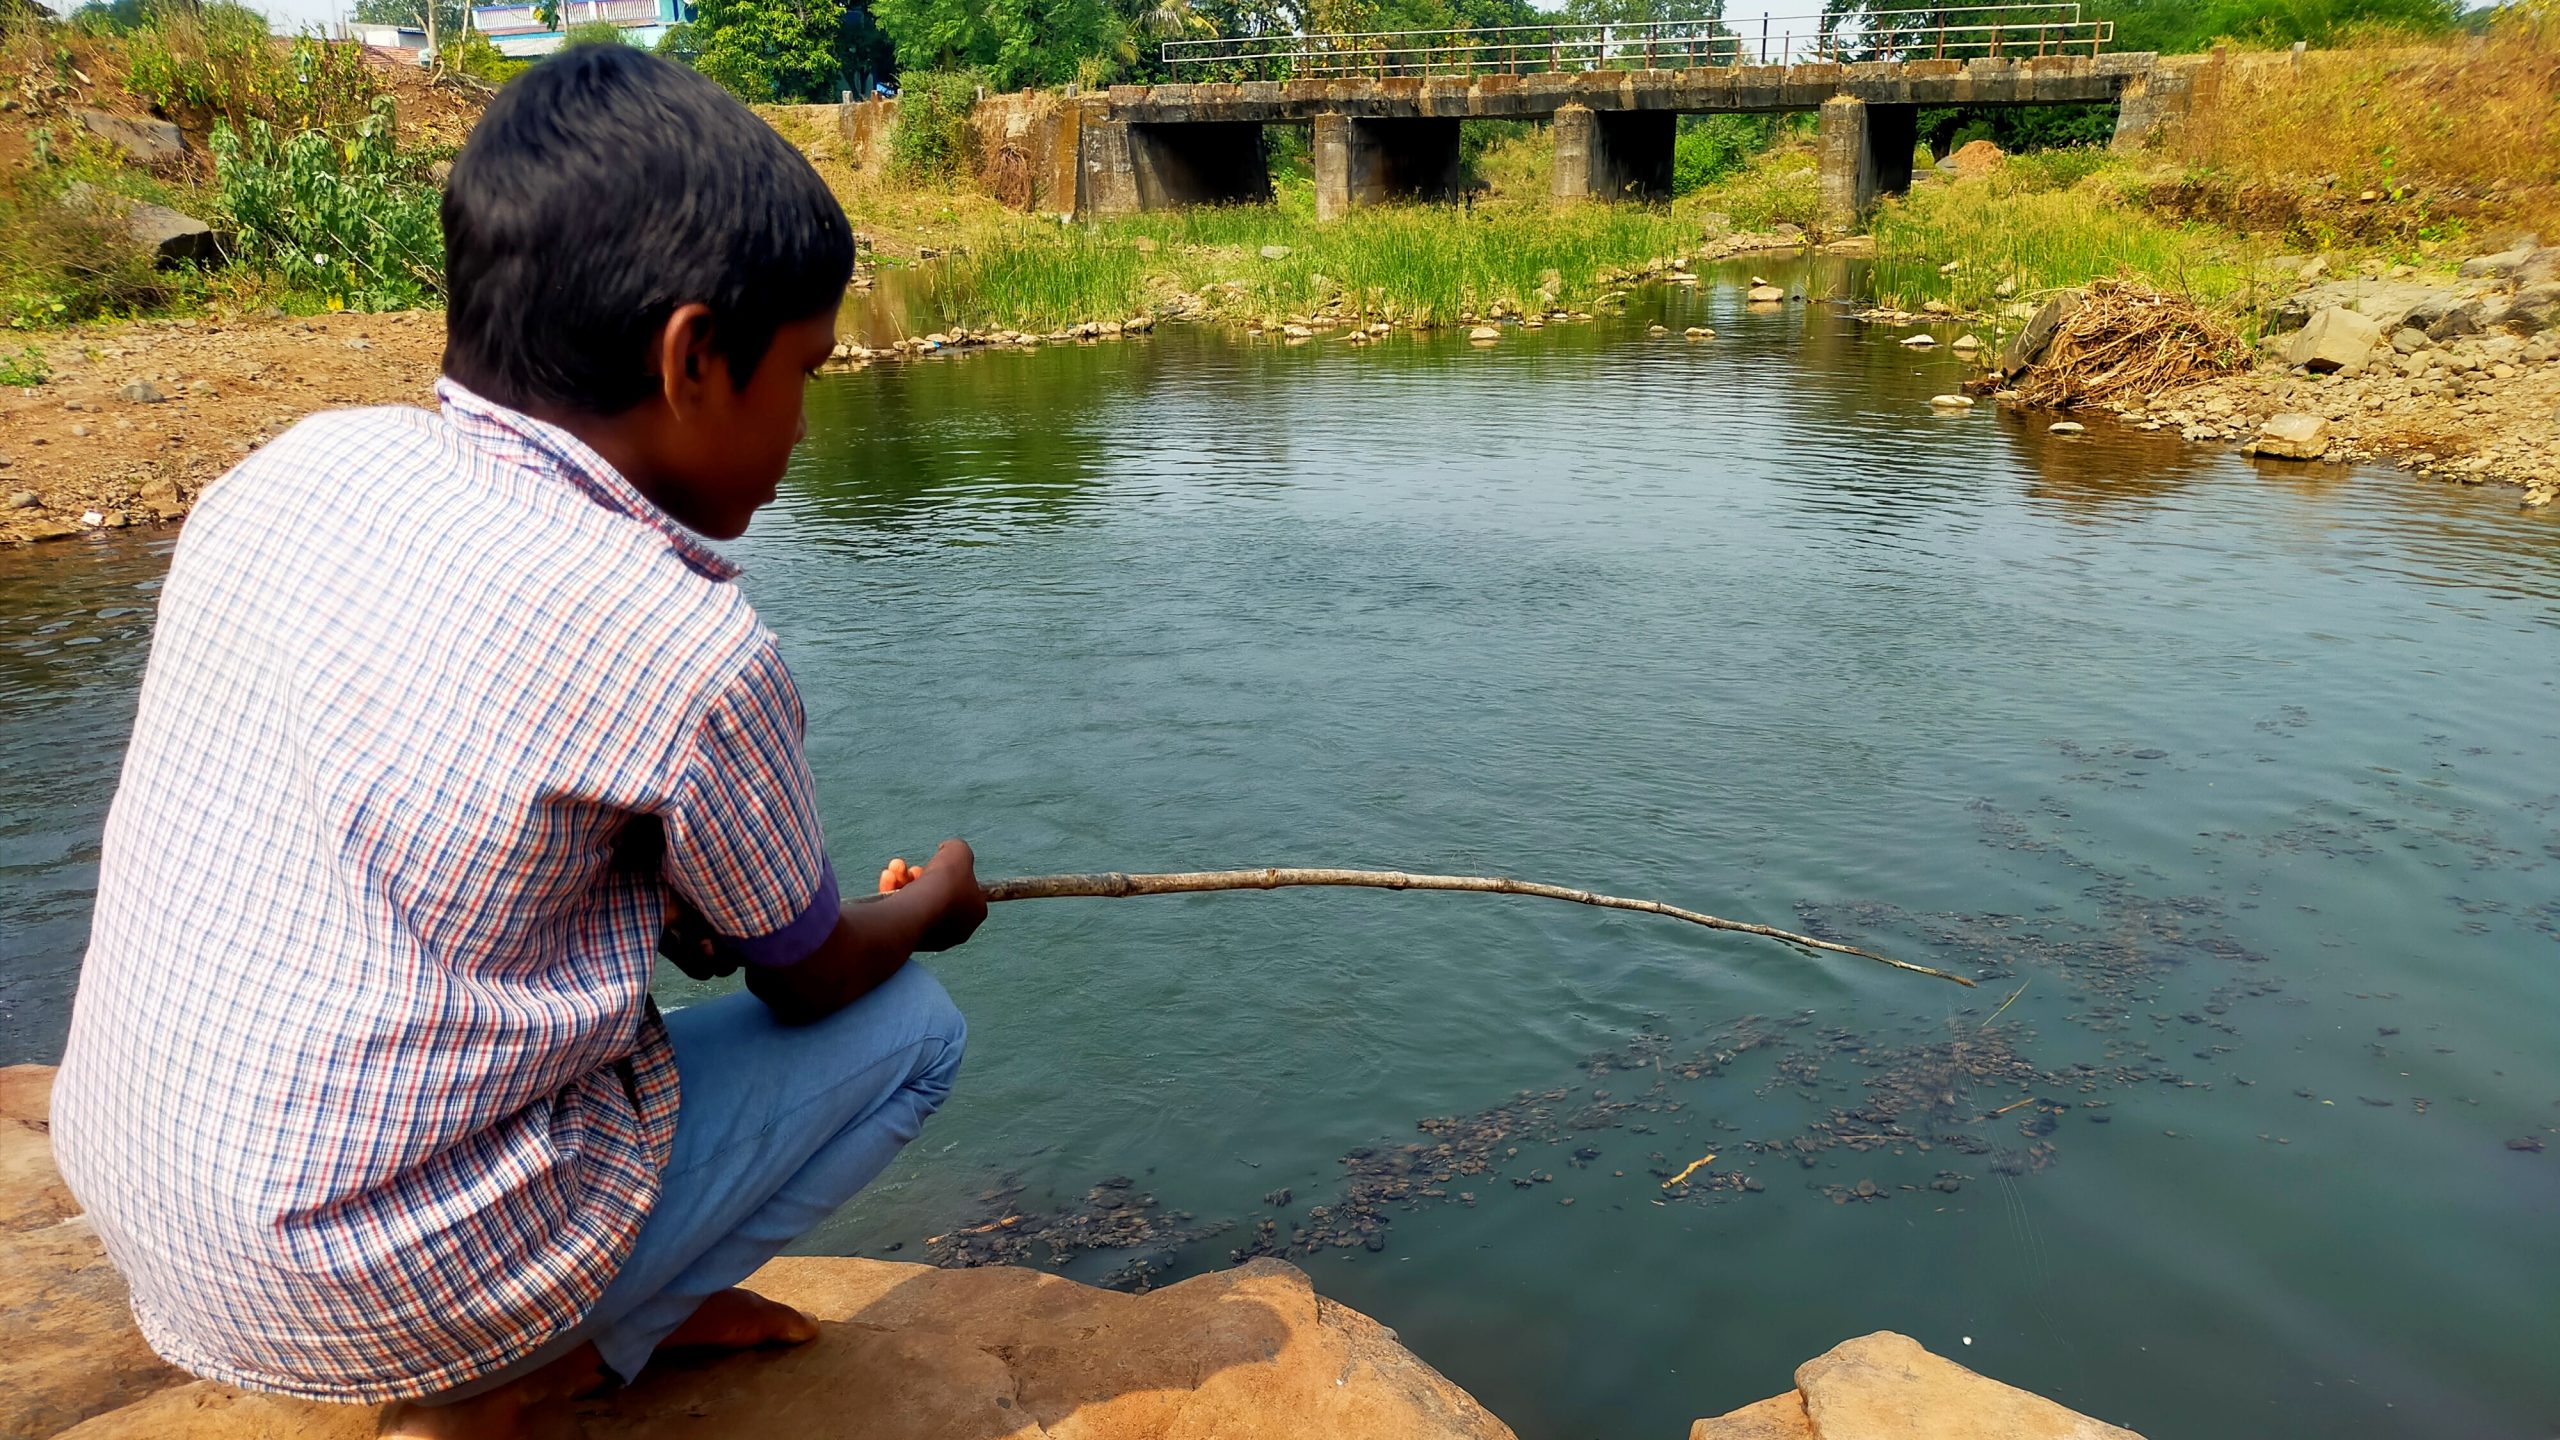 A boy fishing in a pond